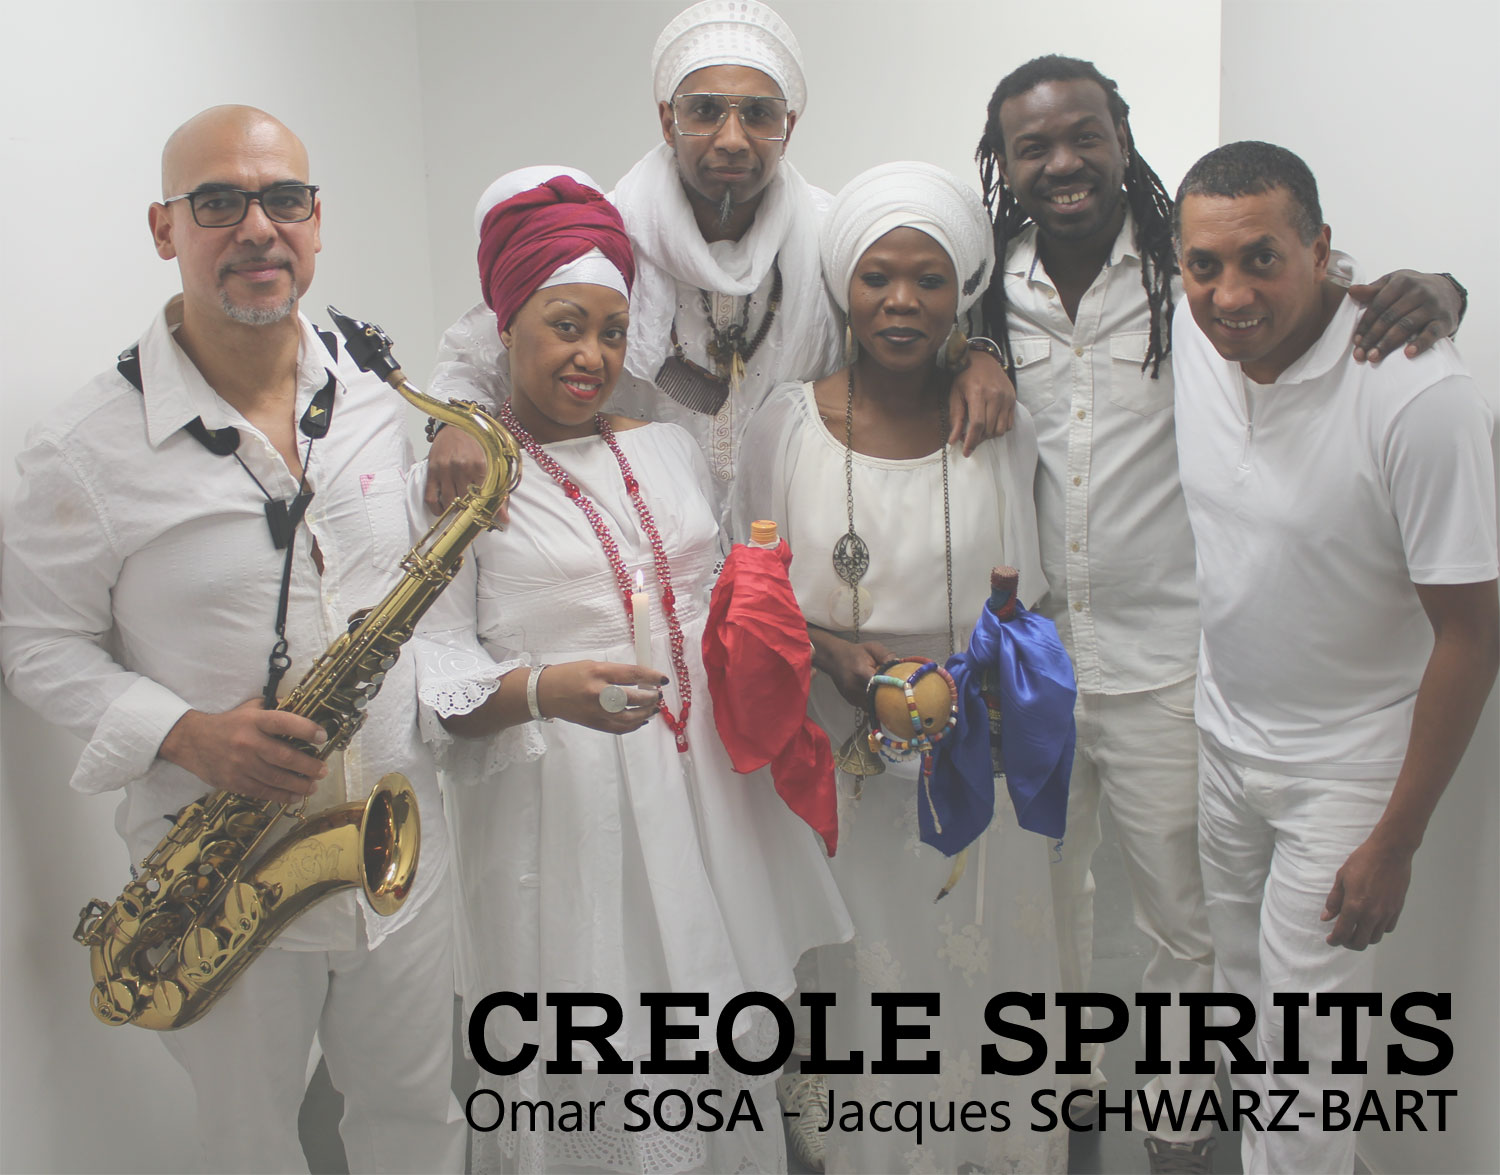 Omar Sosa & Jacques Schwarz-Bart "Creole Spirits"